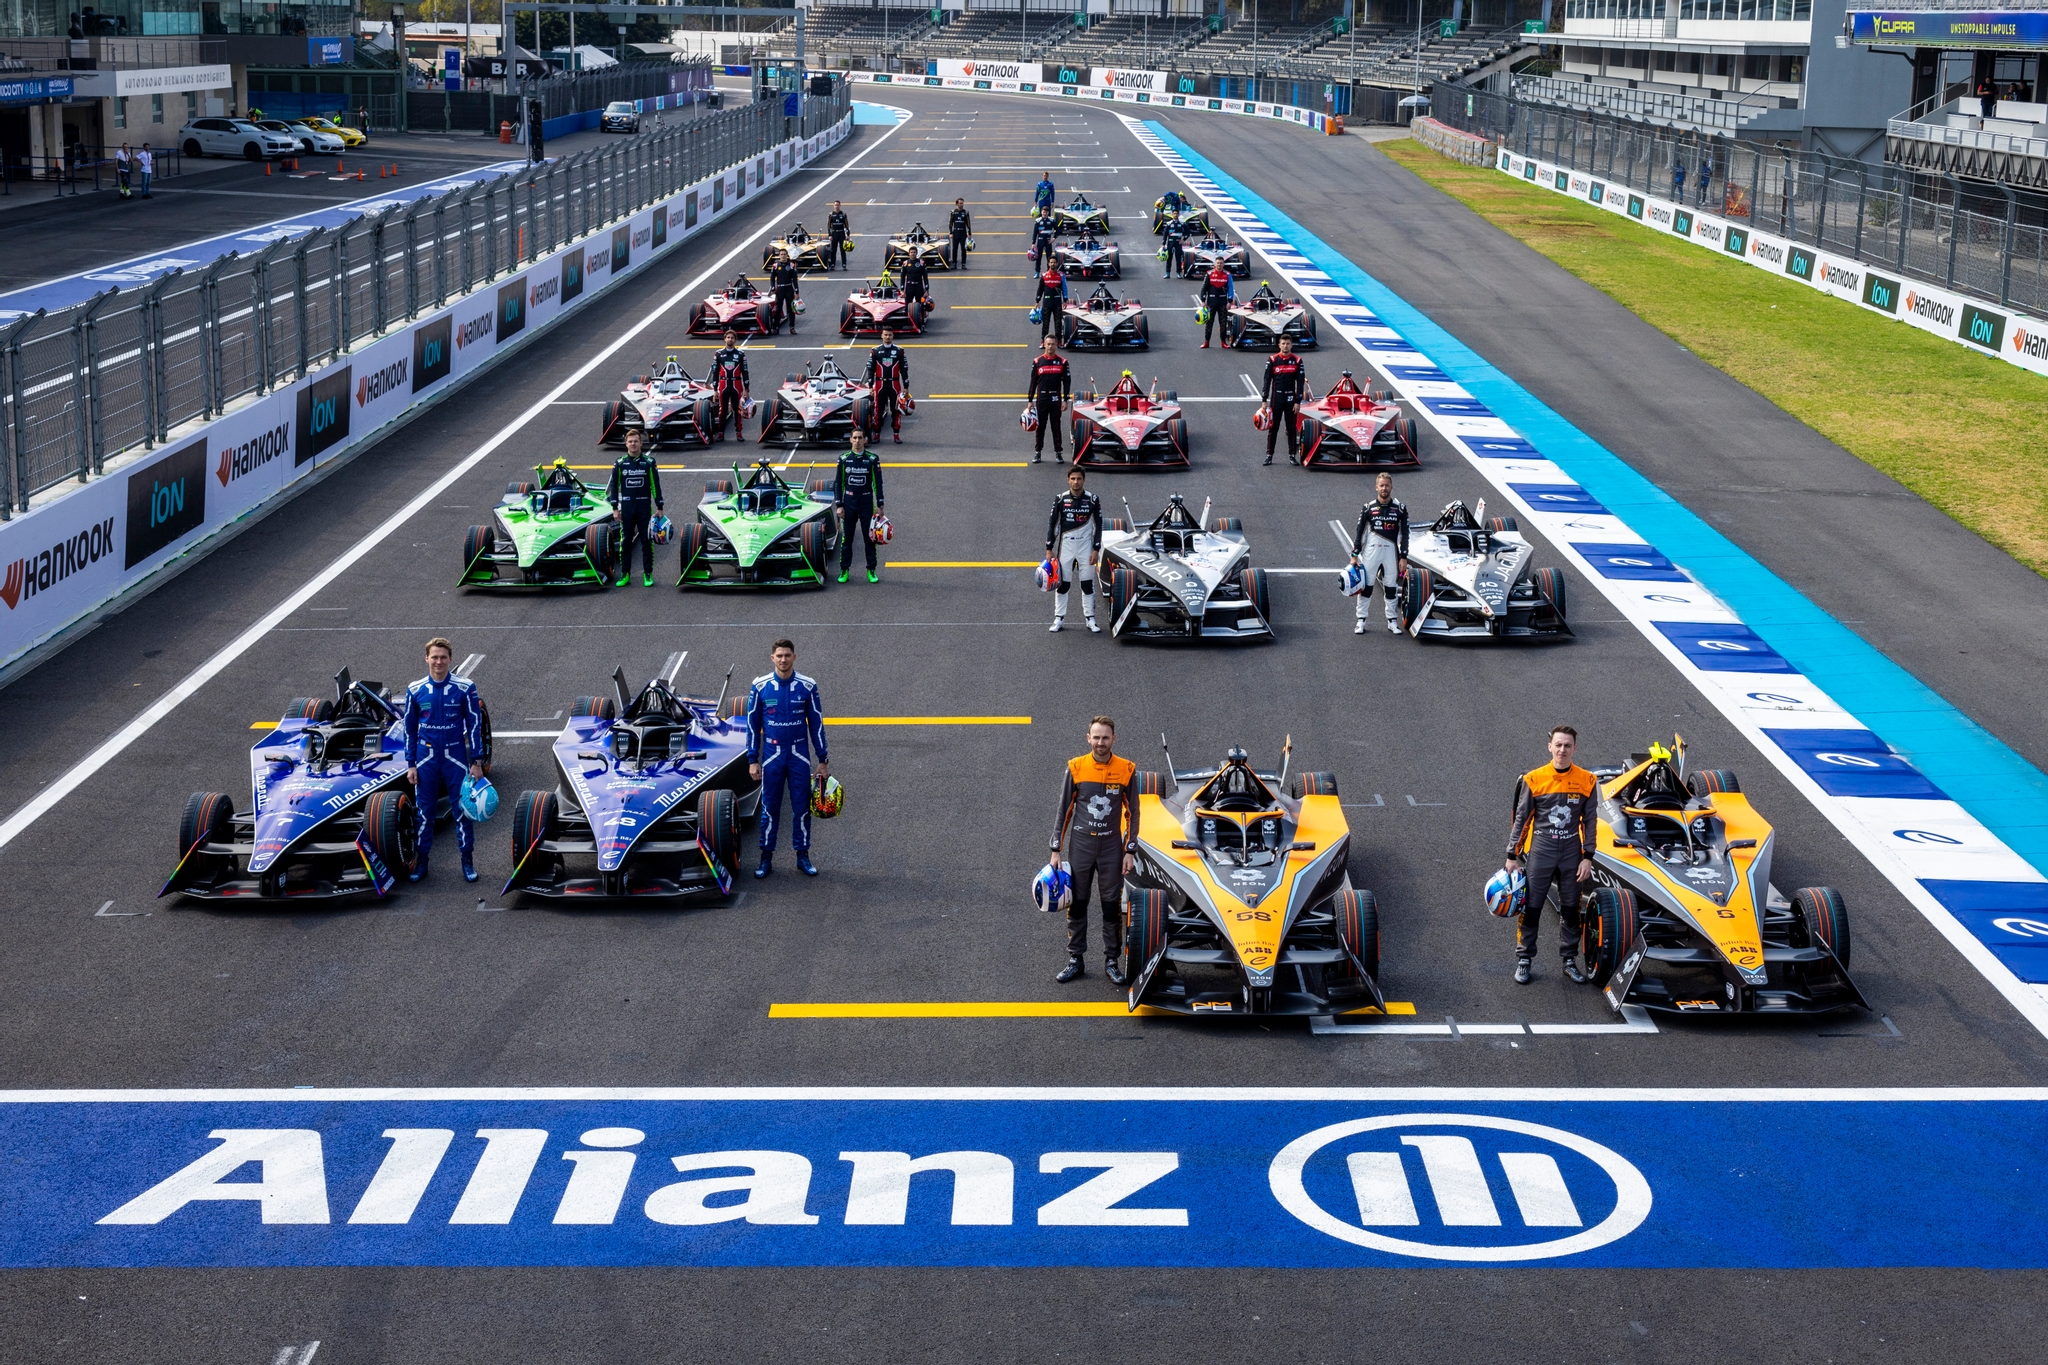 Formula E pre-season 2023 driver line up with cars on the grid.